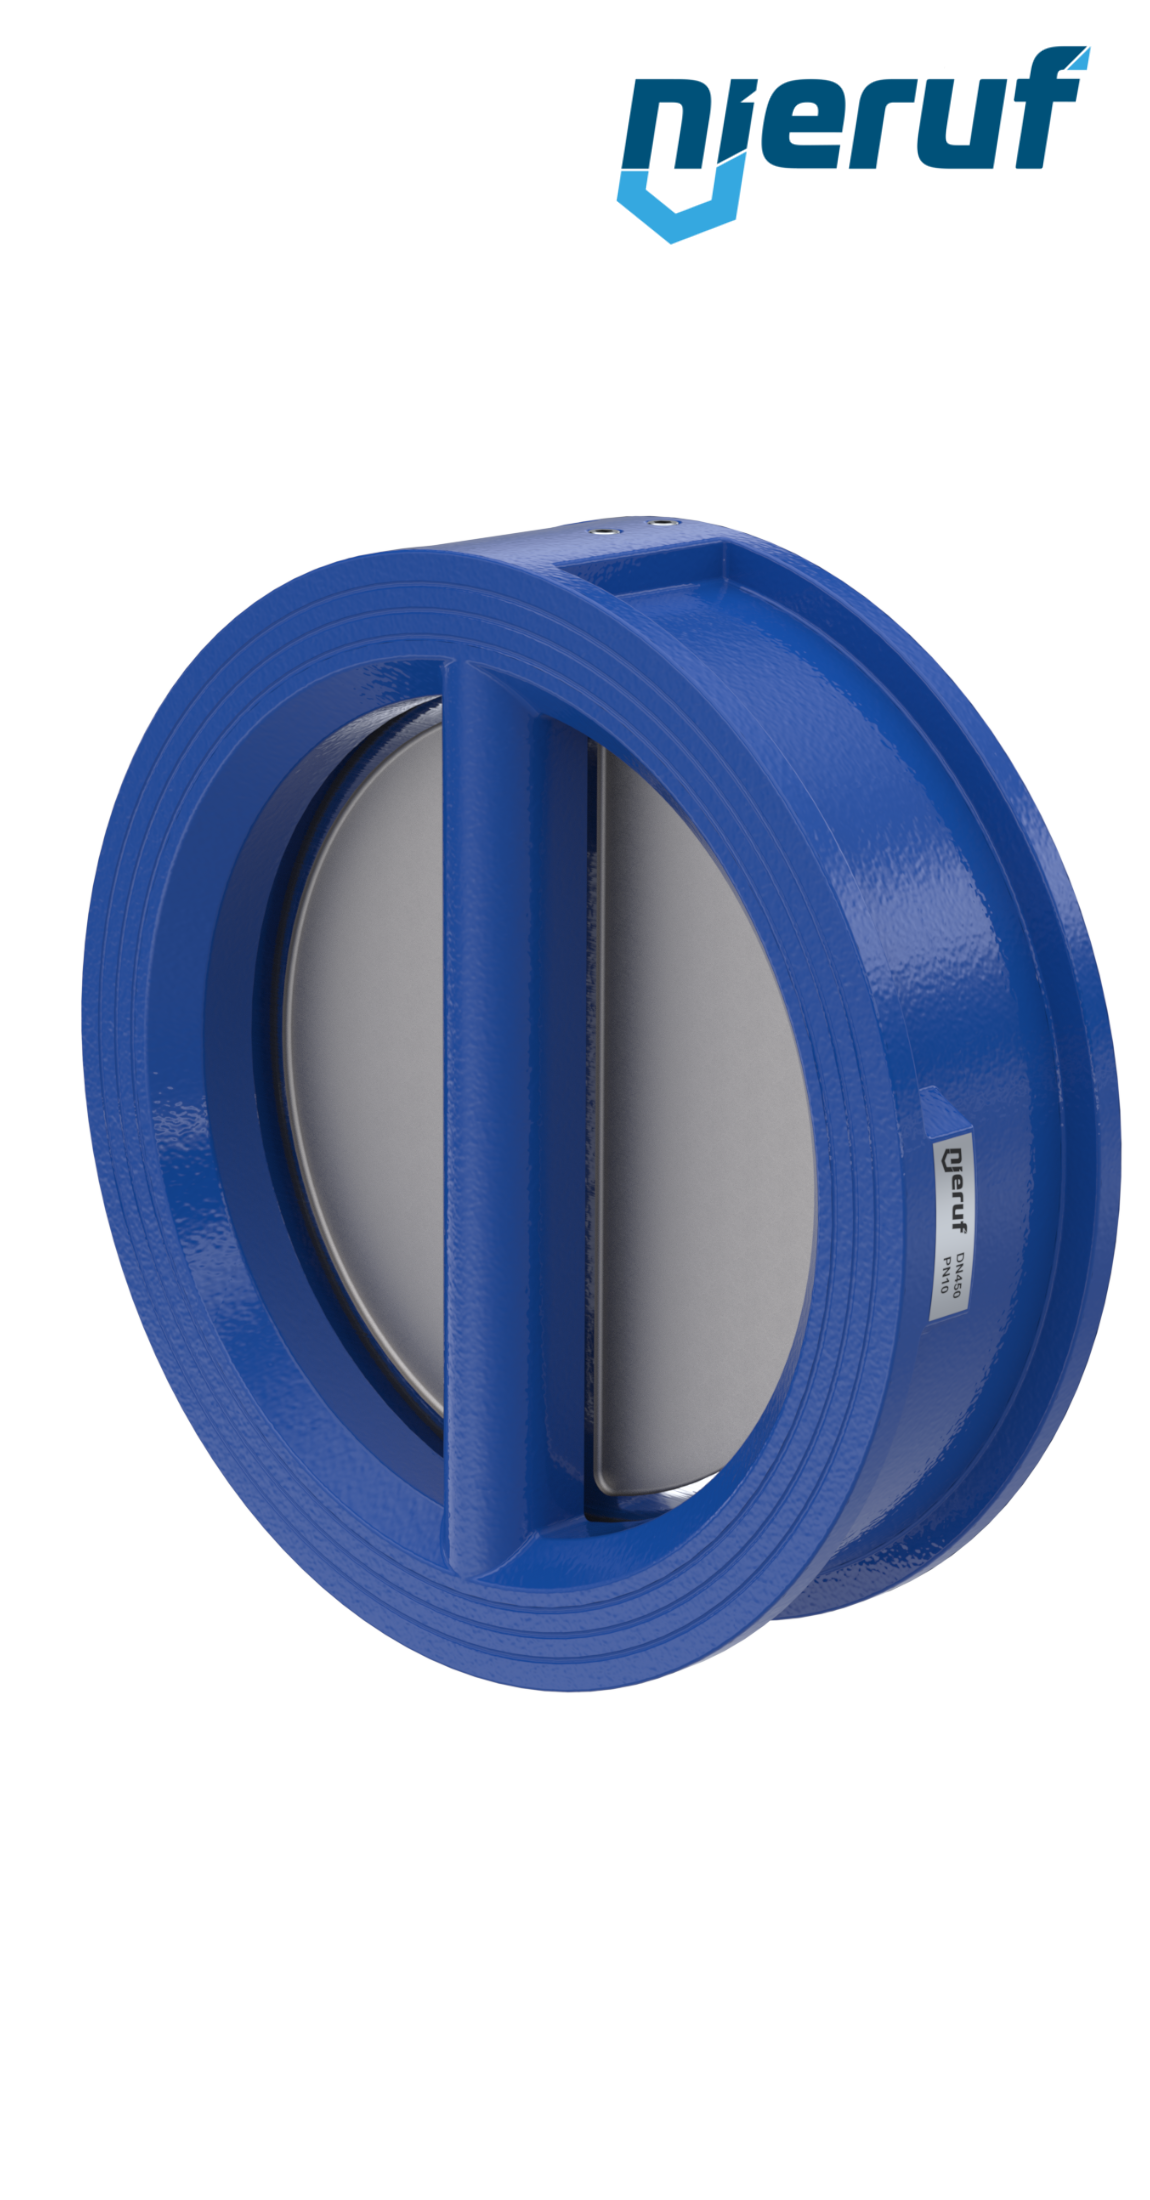 dual plate check valve DN450 DR02 GGG40 epoxyd plated blue 180µm FKM (Viton)